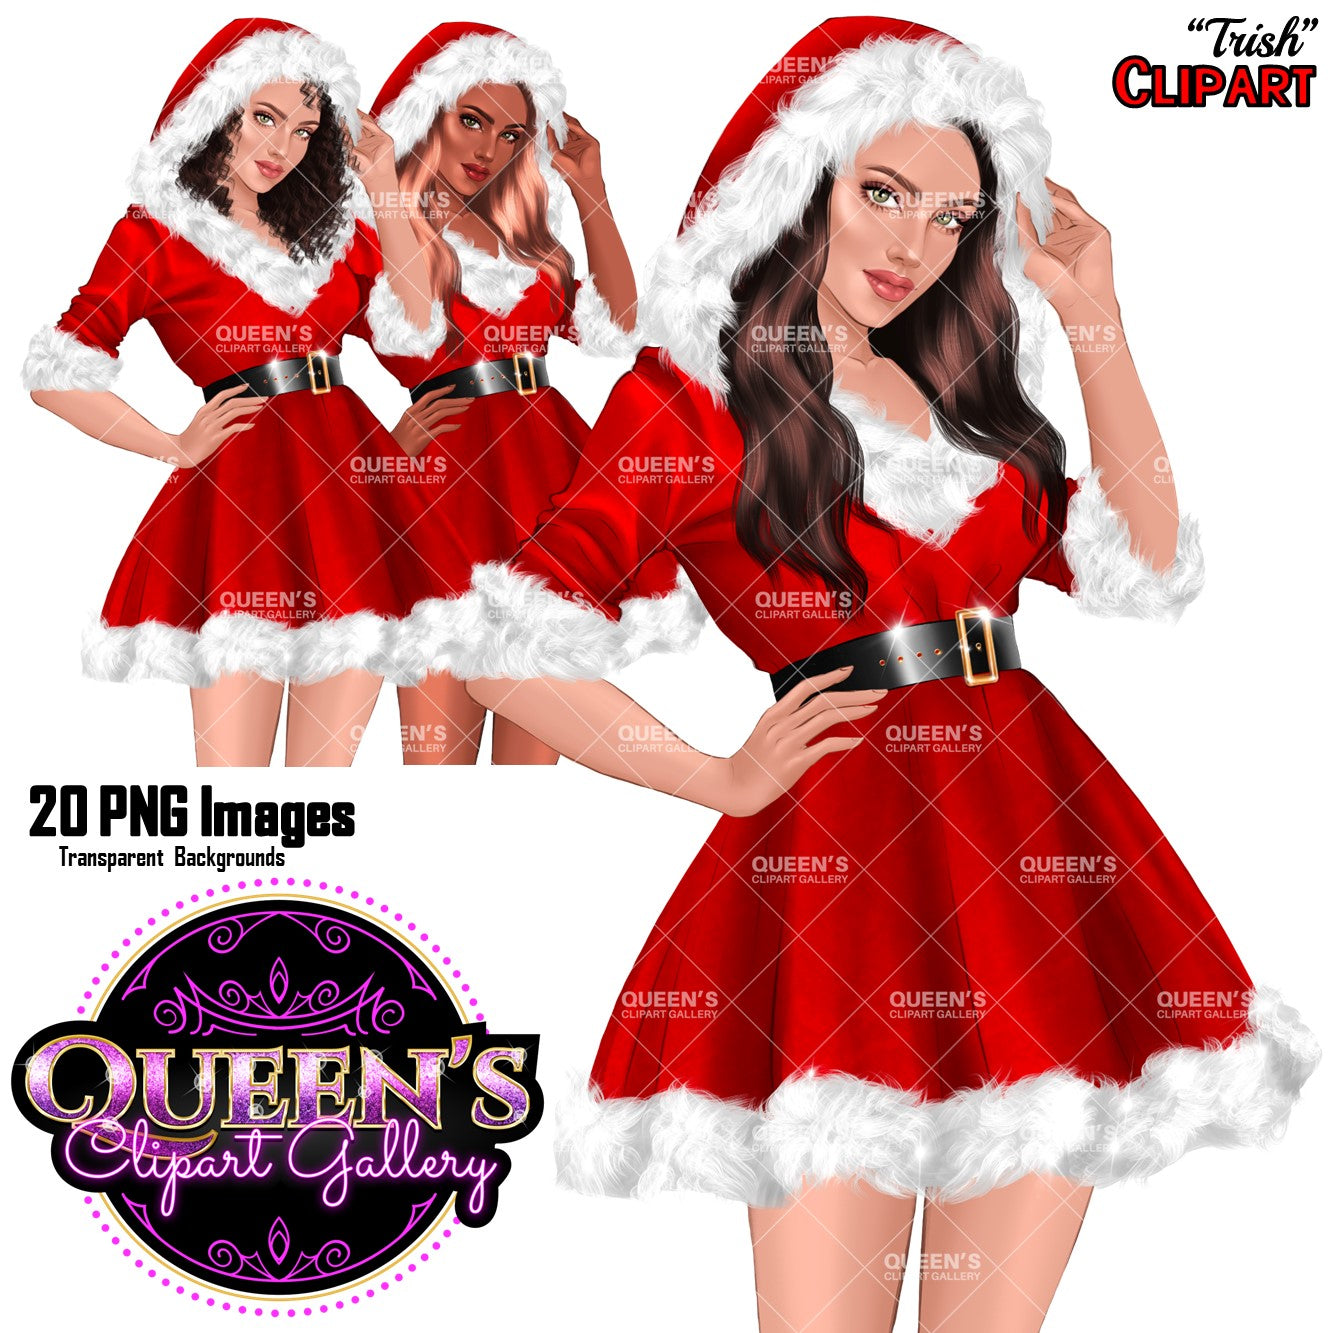 Santa Claus clipart, Santa costume clipart, New Year's clipart, Christmas girl clipart, Woman in Santa hat, Winter clipart, Santa outfit